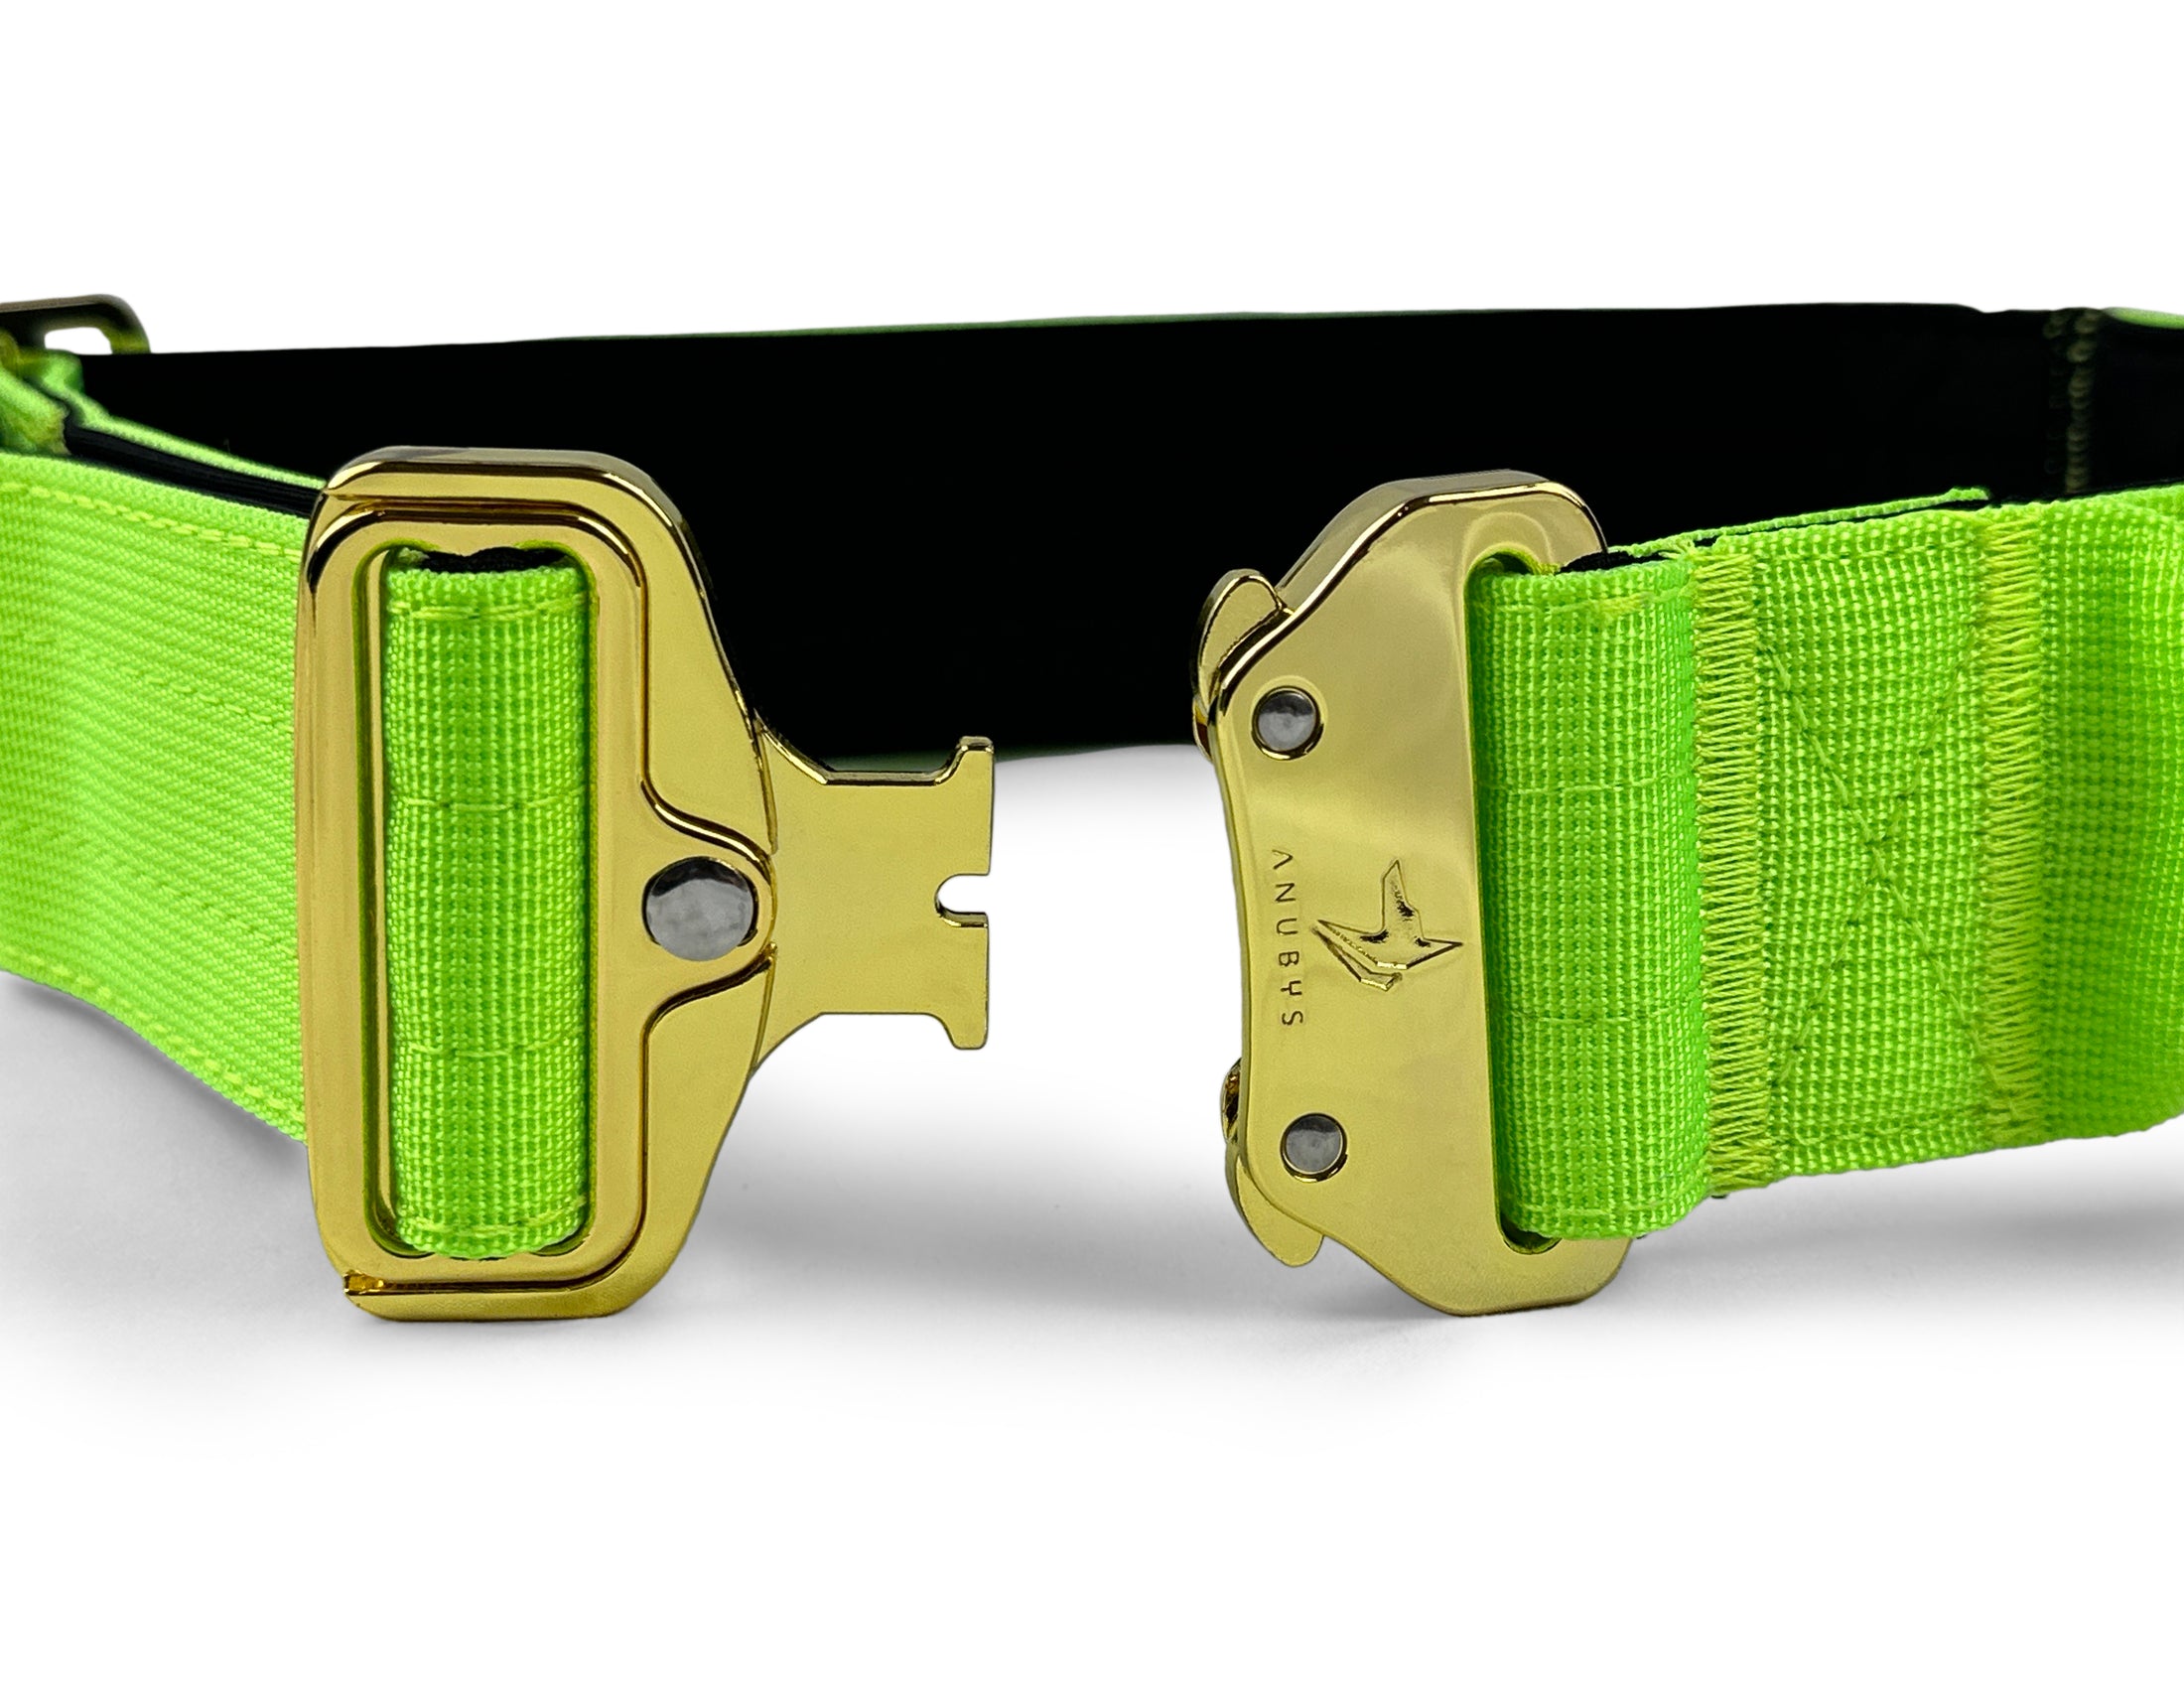 2.5cm Elite Tactical Collar | Tri-Layered | Neon Green - Anubys - X Small - Neon Green - -